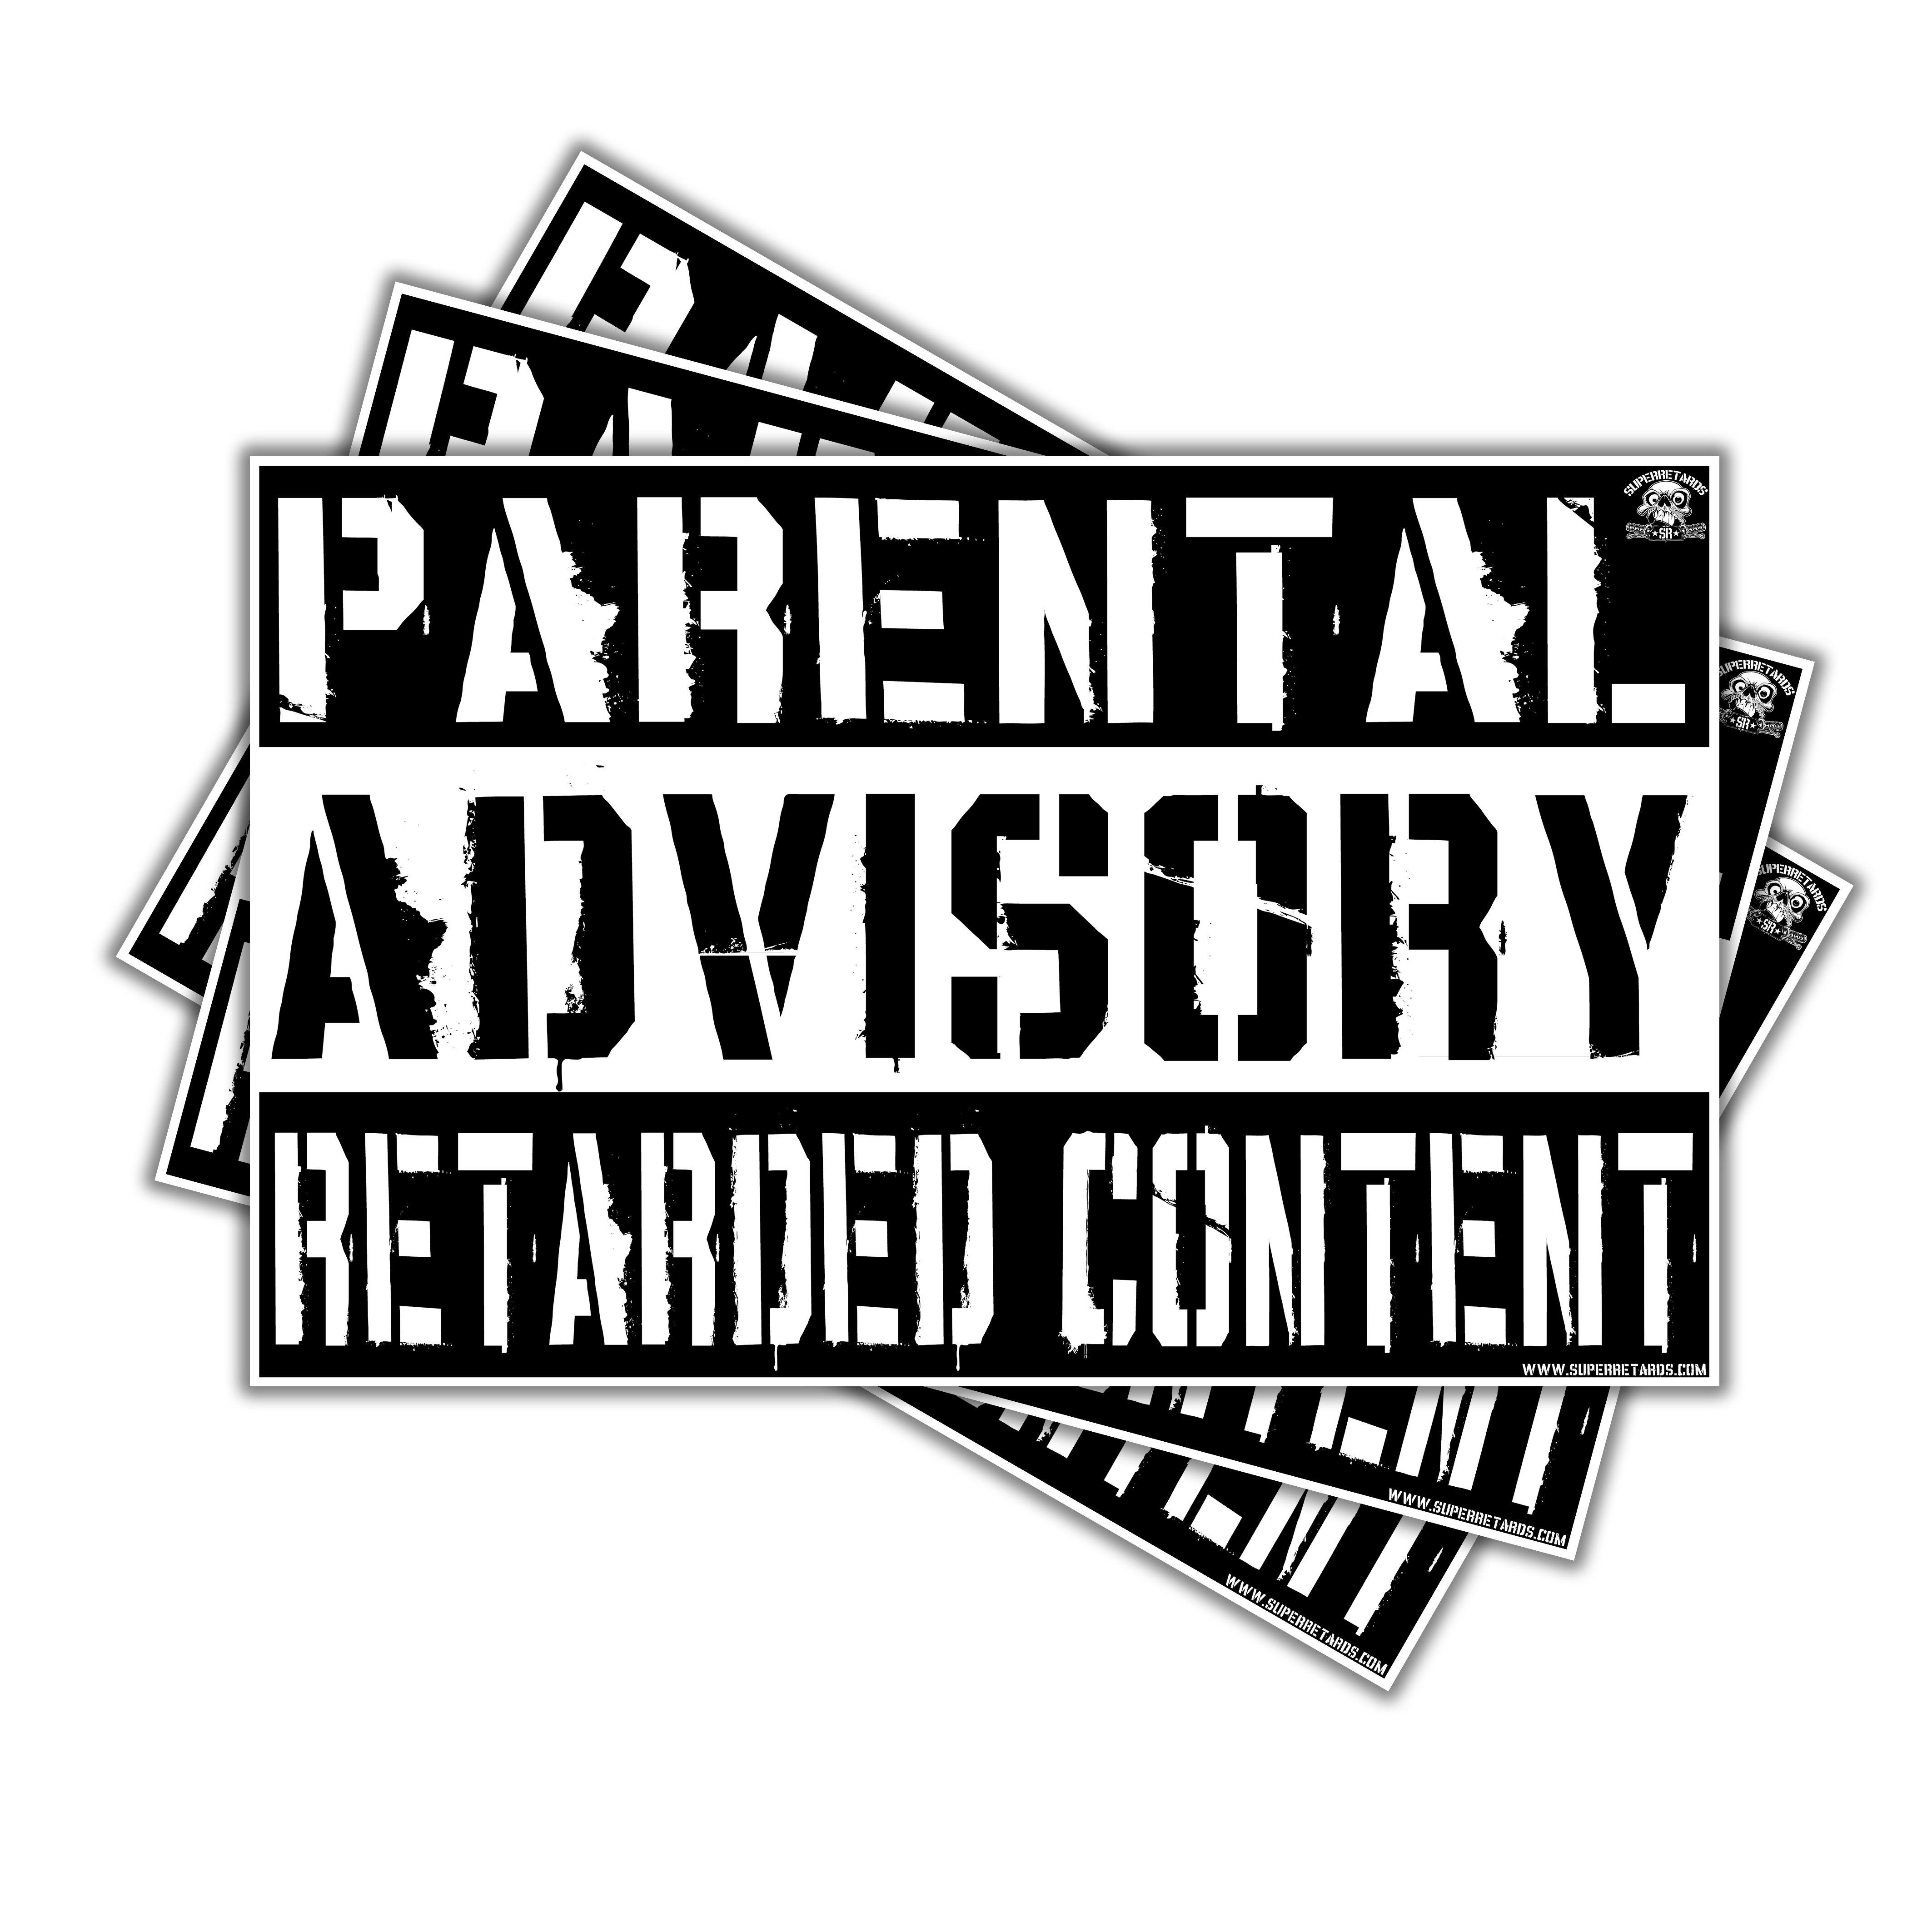 parental advisory logo logodix logodix logo